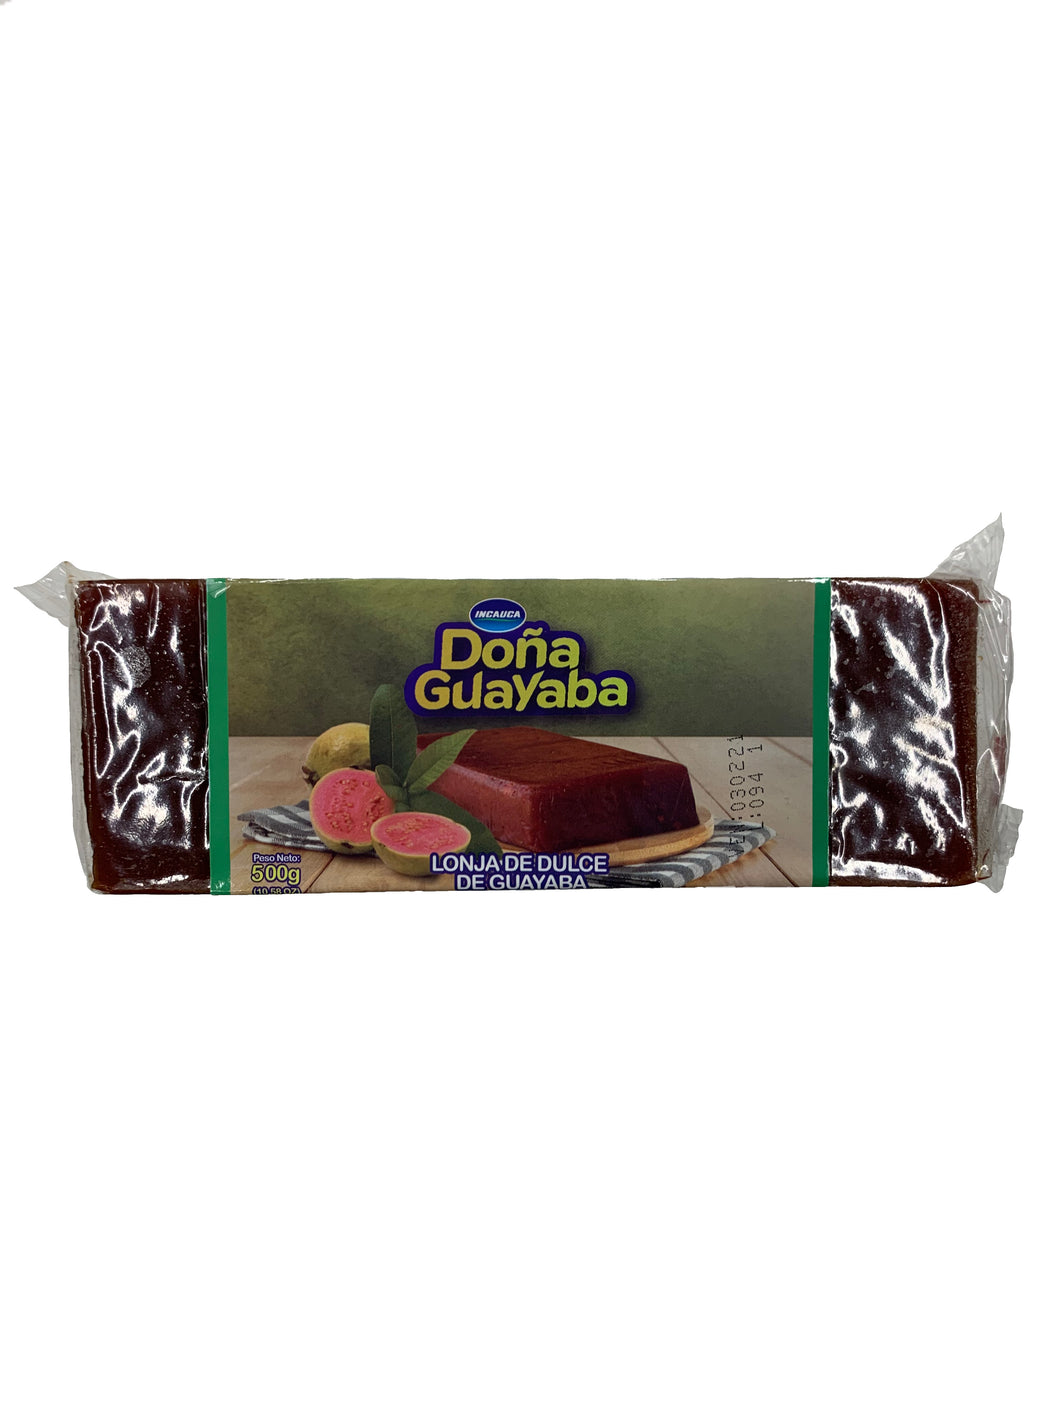 Dona Guayaba Guava Paste - Lonja De Guayaba 500g